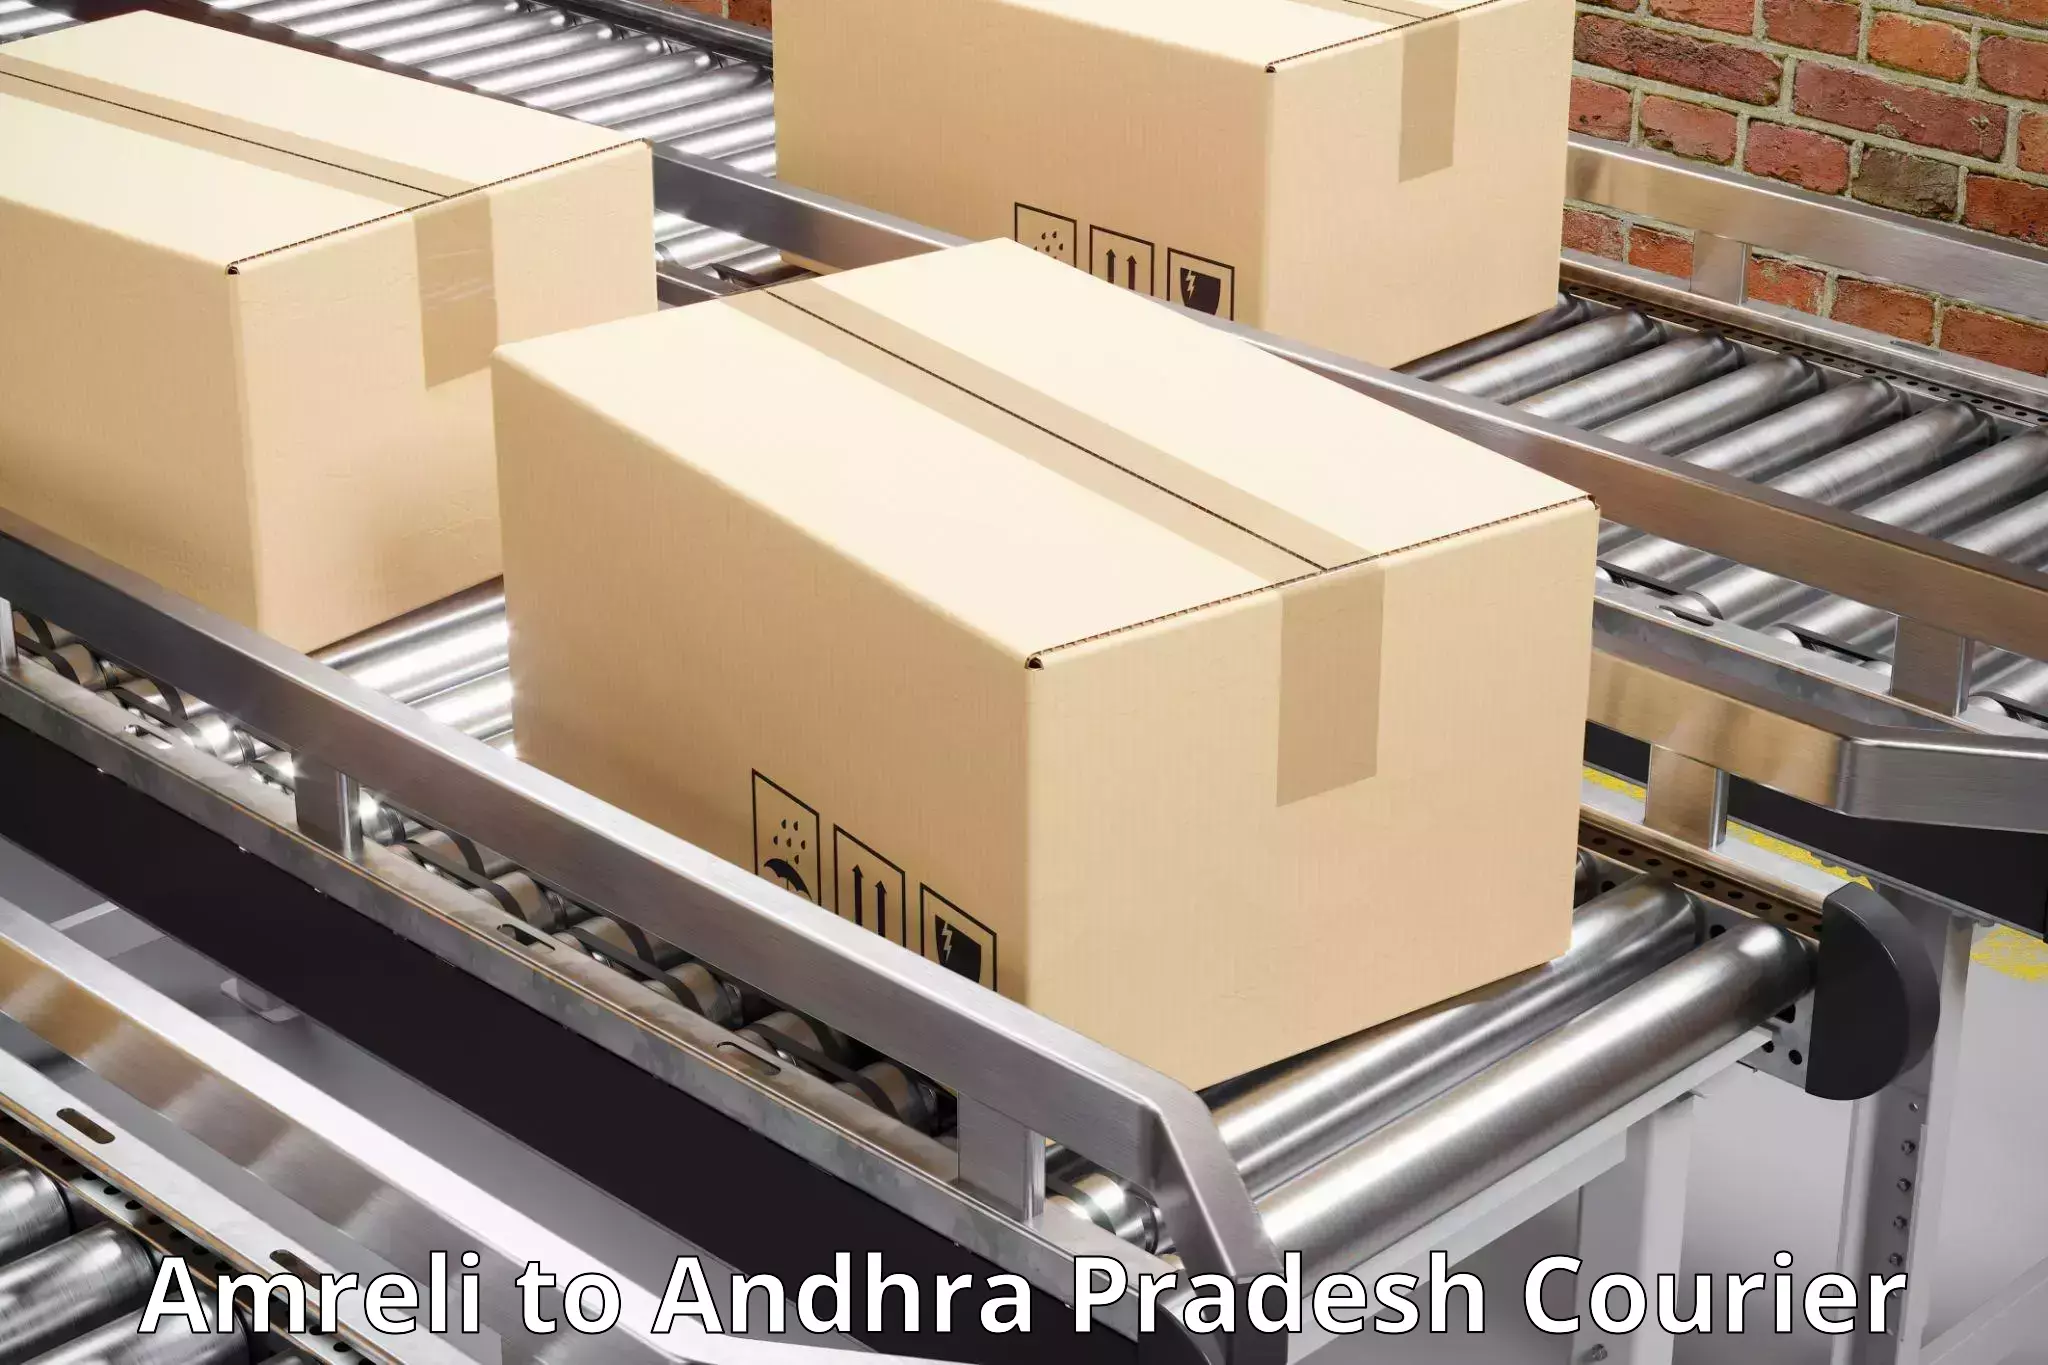 Express delivery capabilities Amreli to Andhra Pradesh